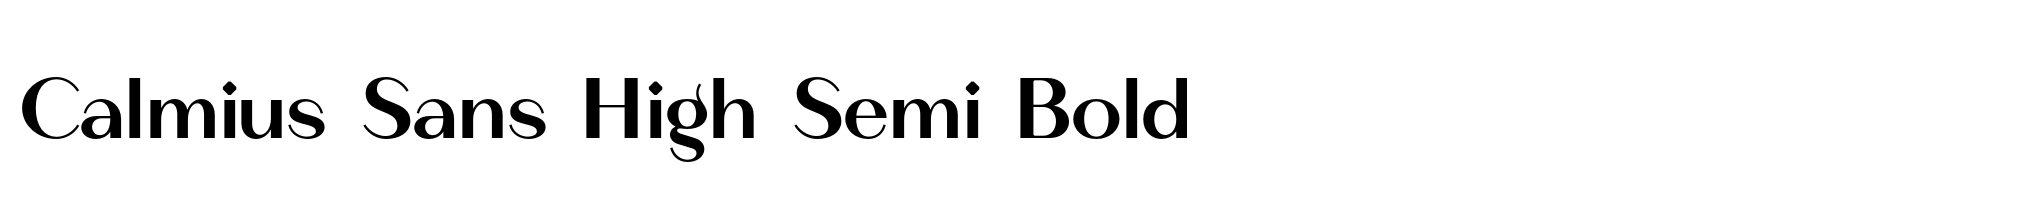 Calmius Sans High Semi Bold image